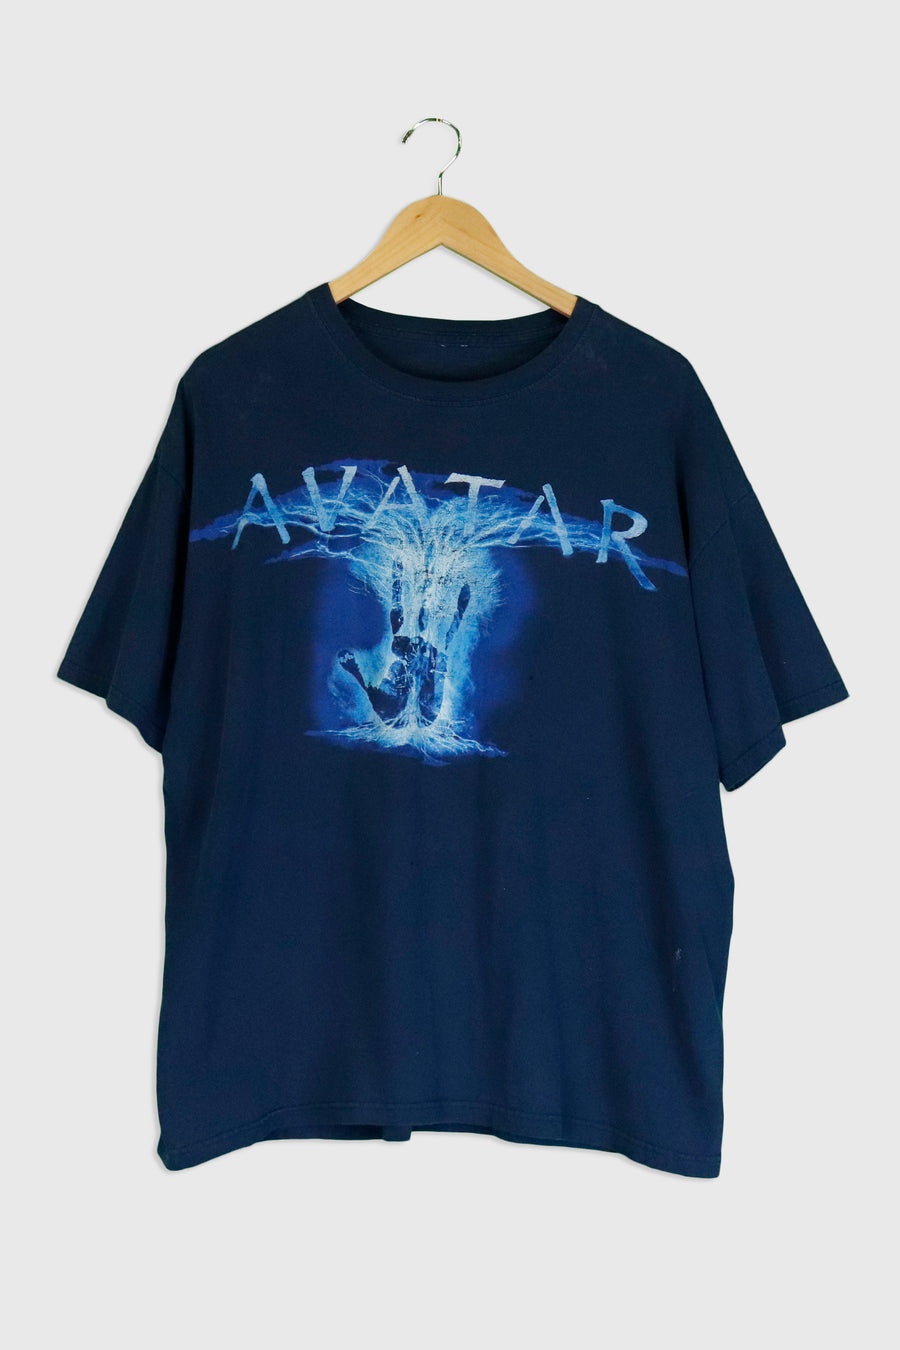 Vintage Avatar Graphic T Shirt Sz XL